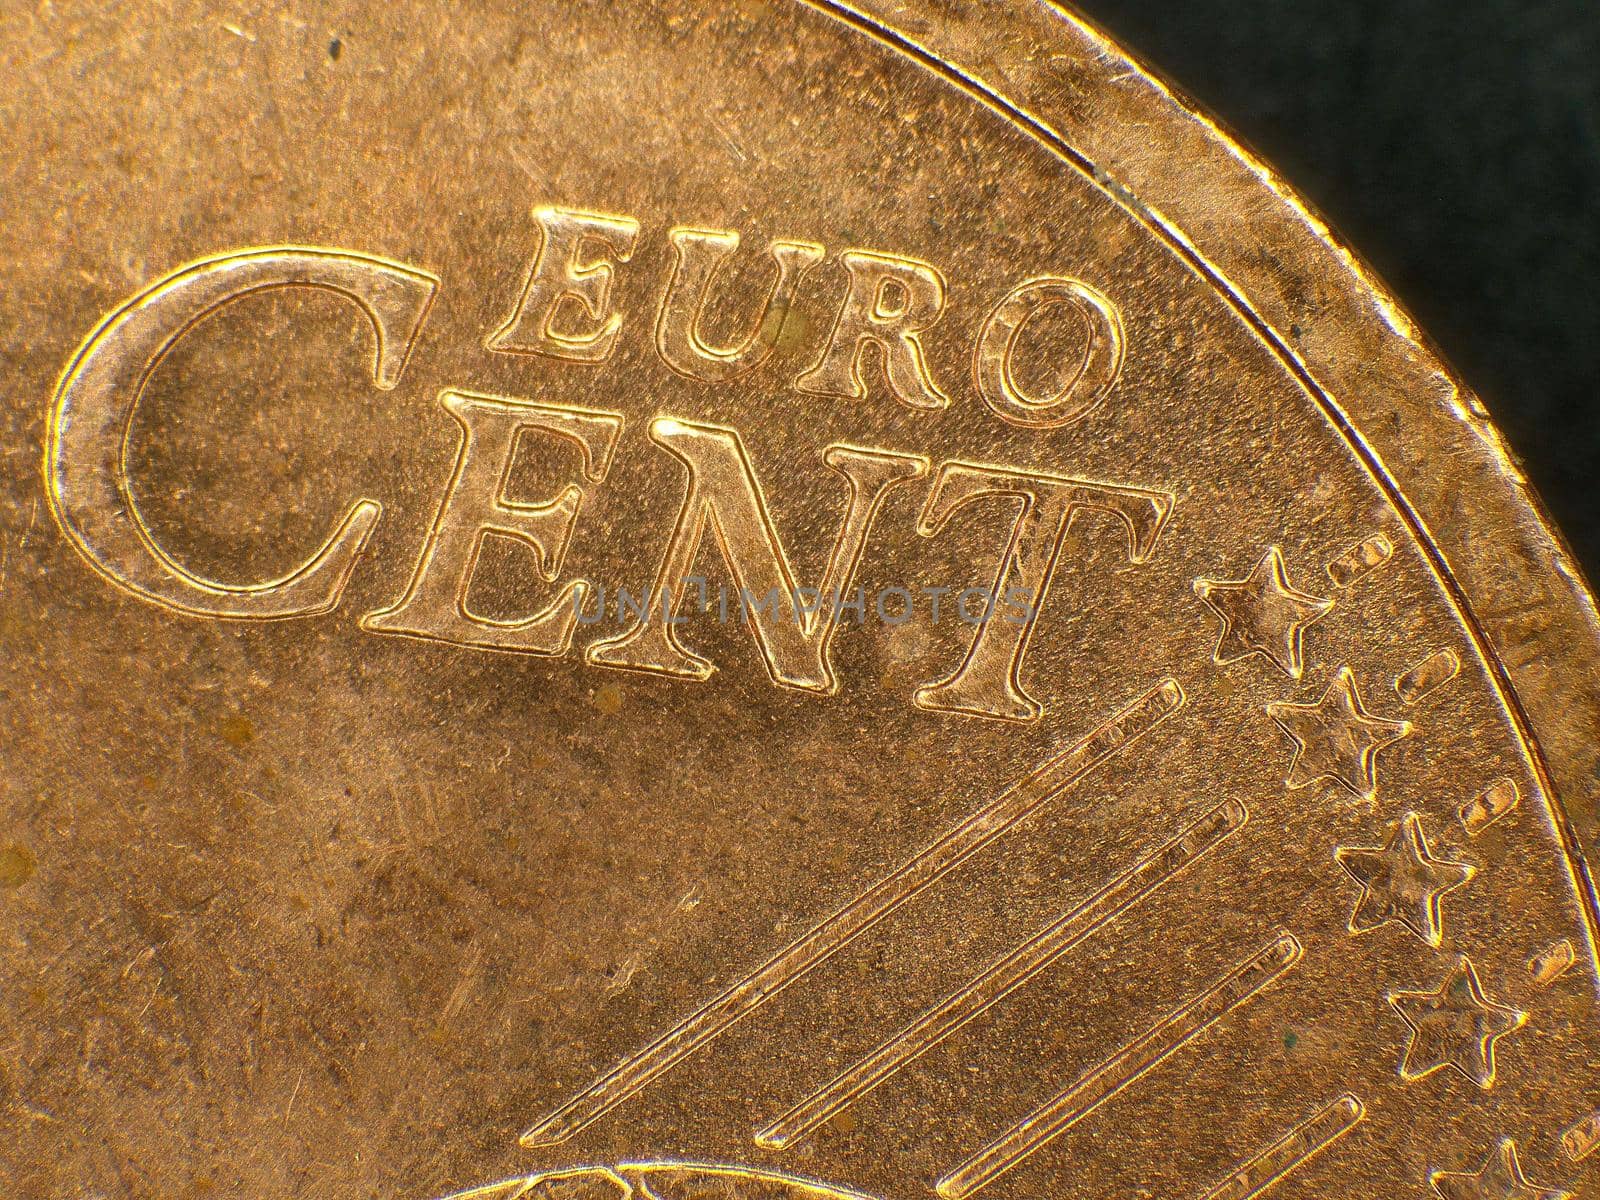 Euro coin in a closeup by Jochen